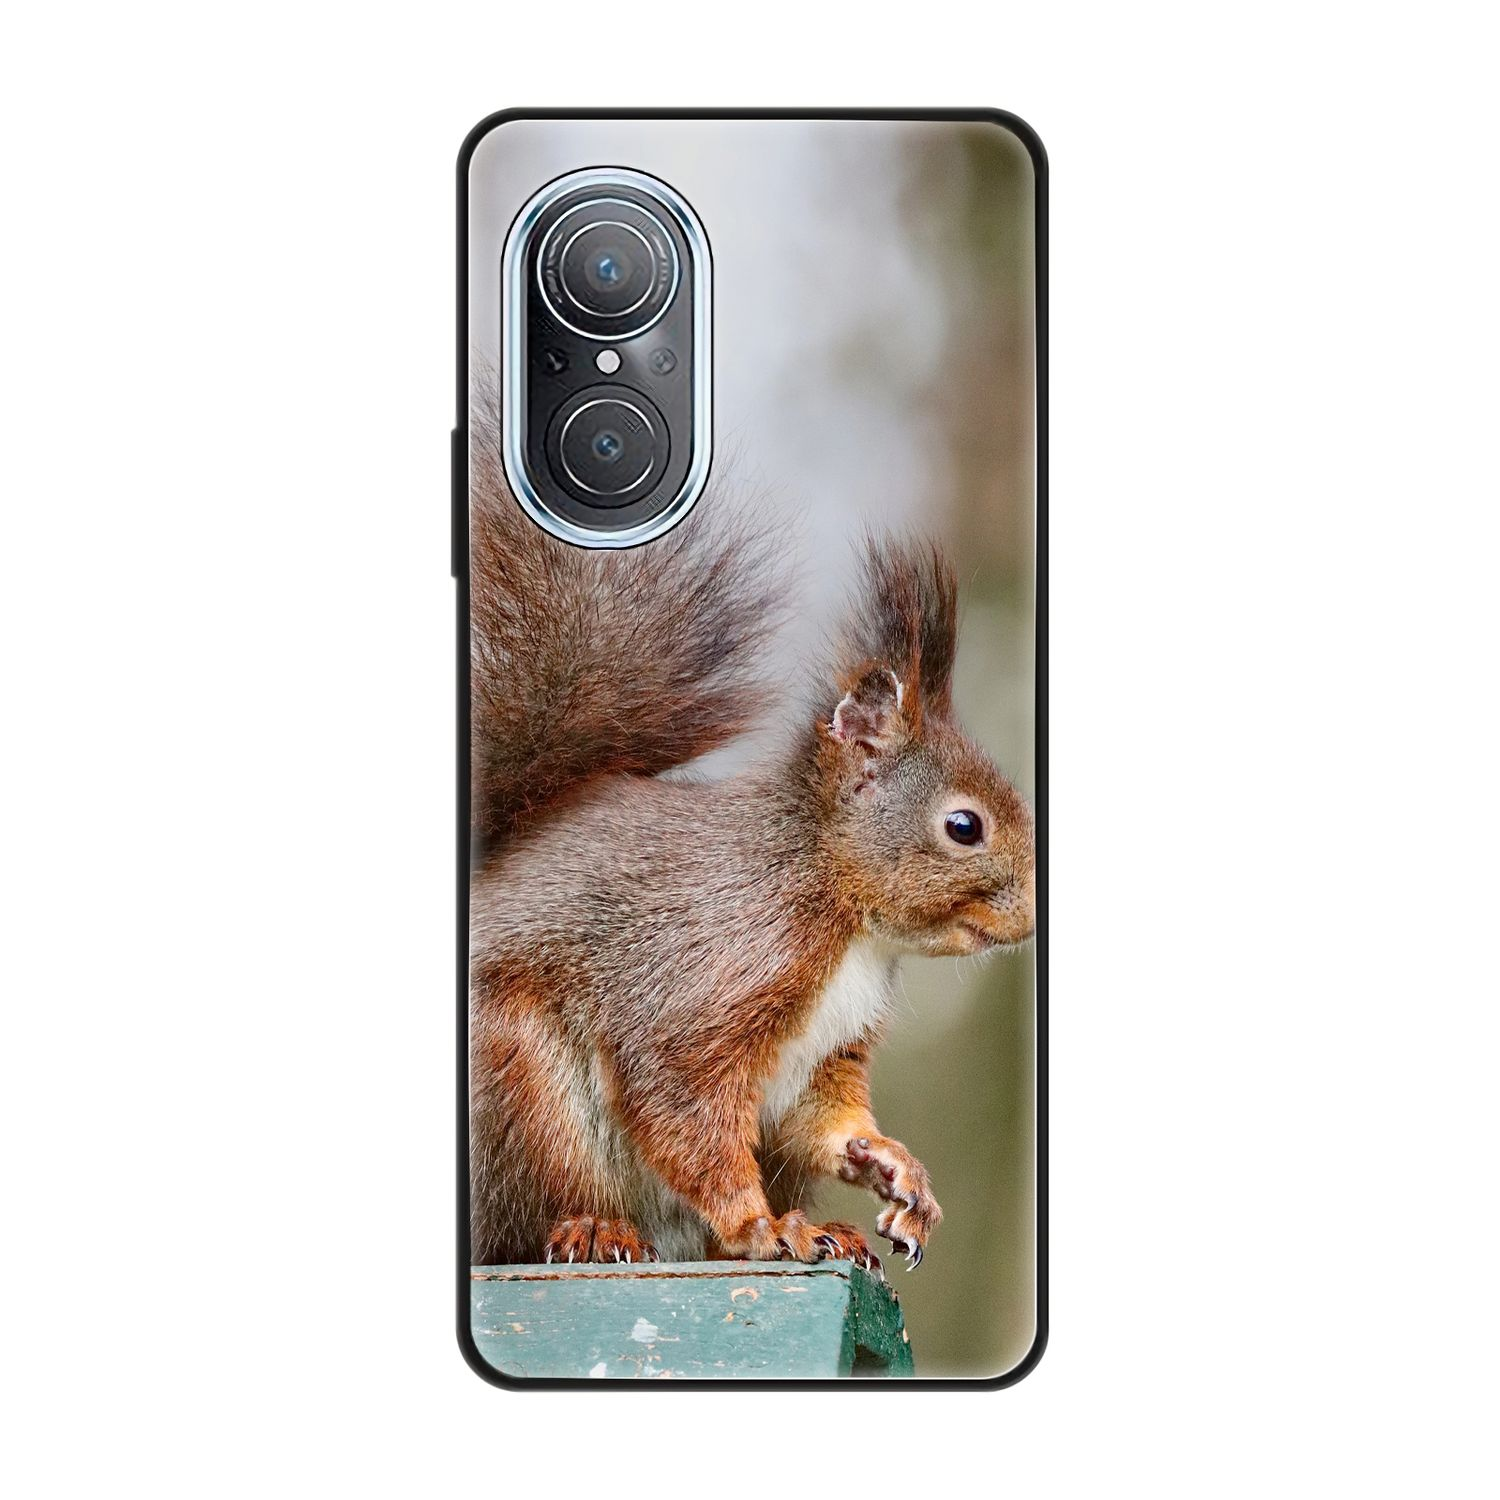 Eichhörnchen DESIGN SE, Case, Backcover, 9 nova Huawei, KÖNIG